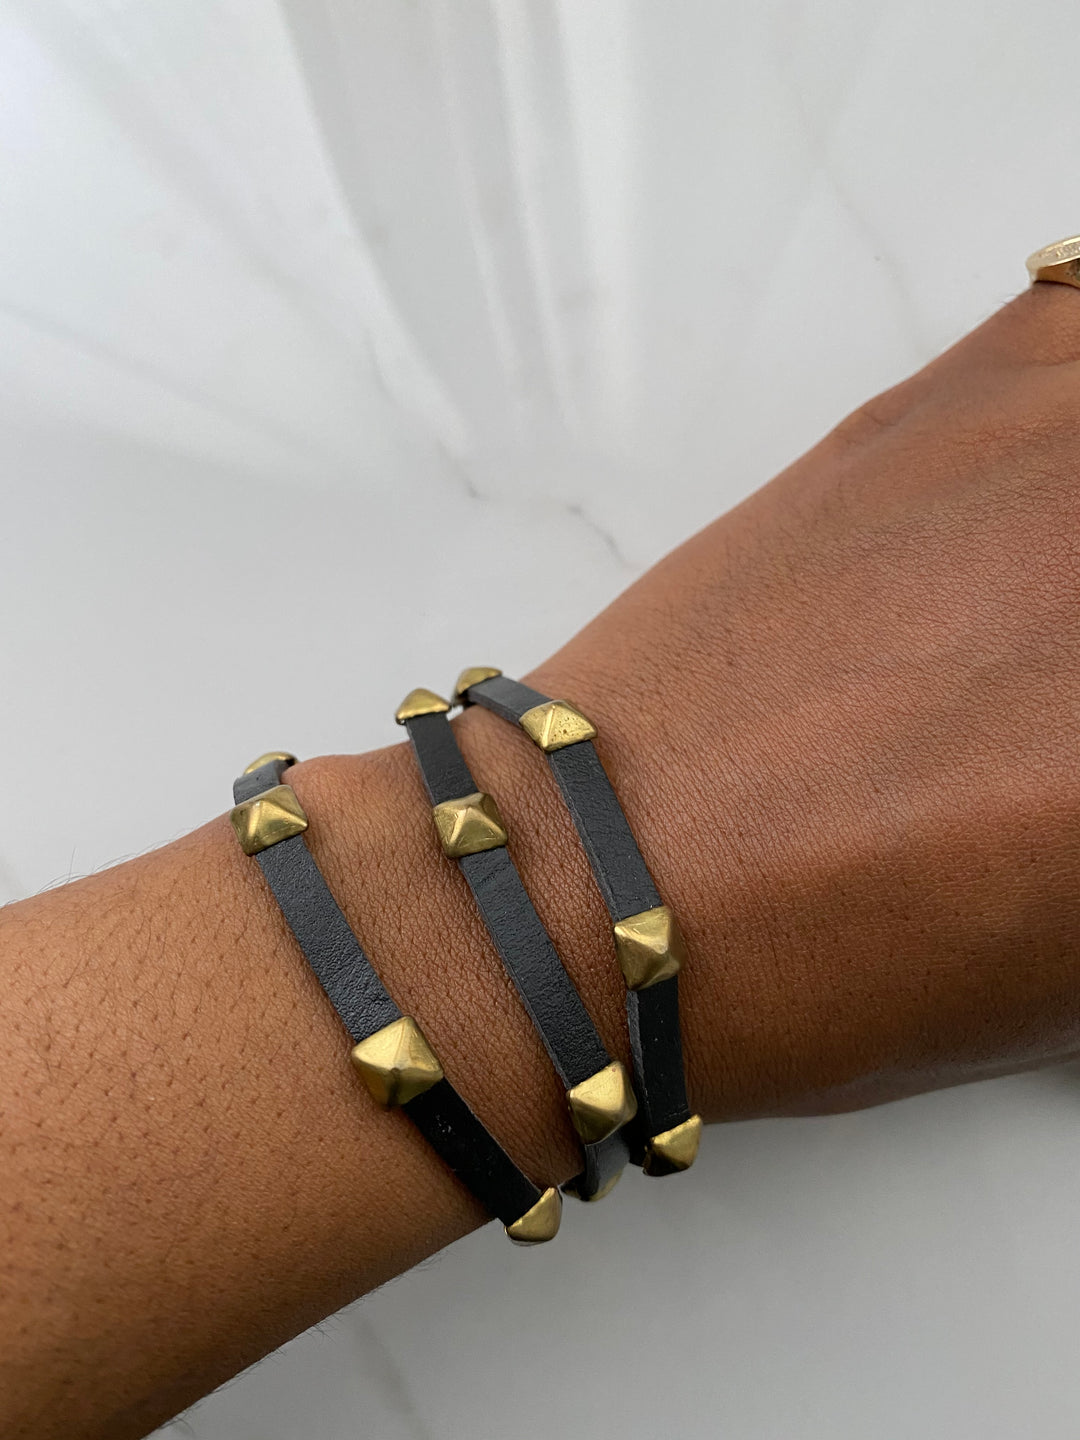 Leather wrap Bracelets (SAMPLE SALE)